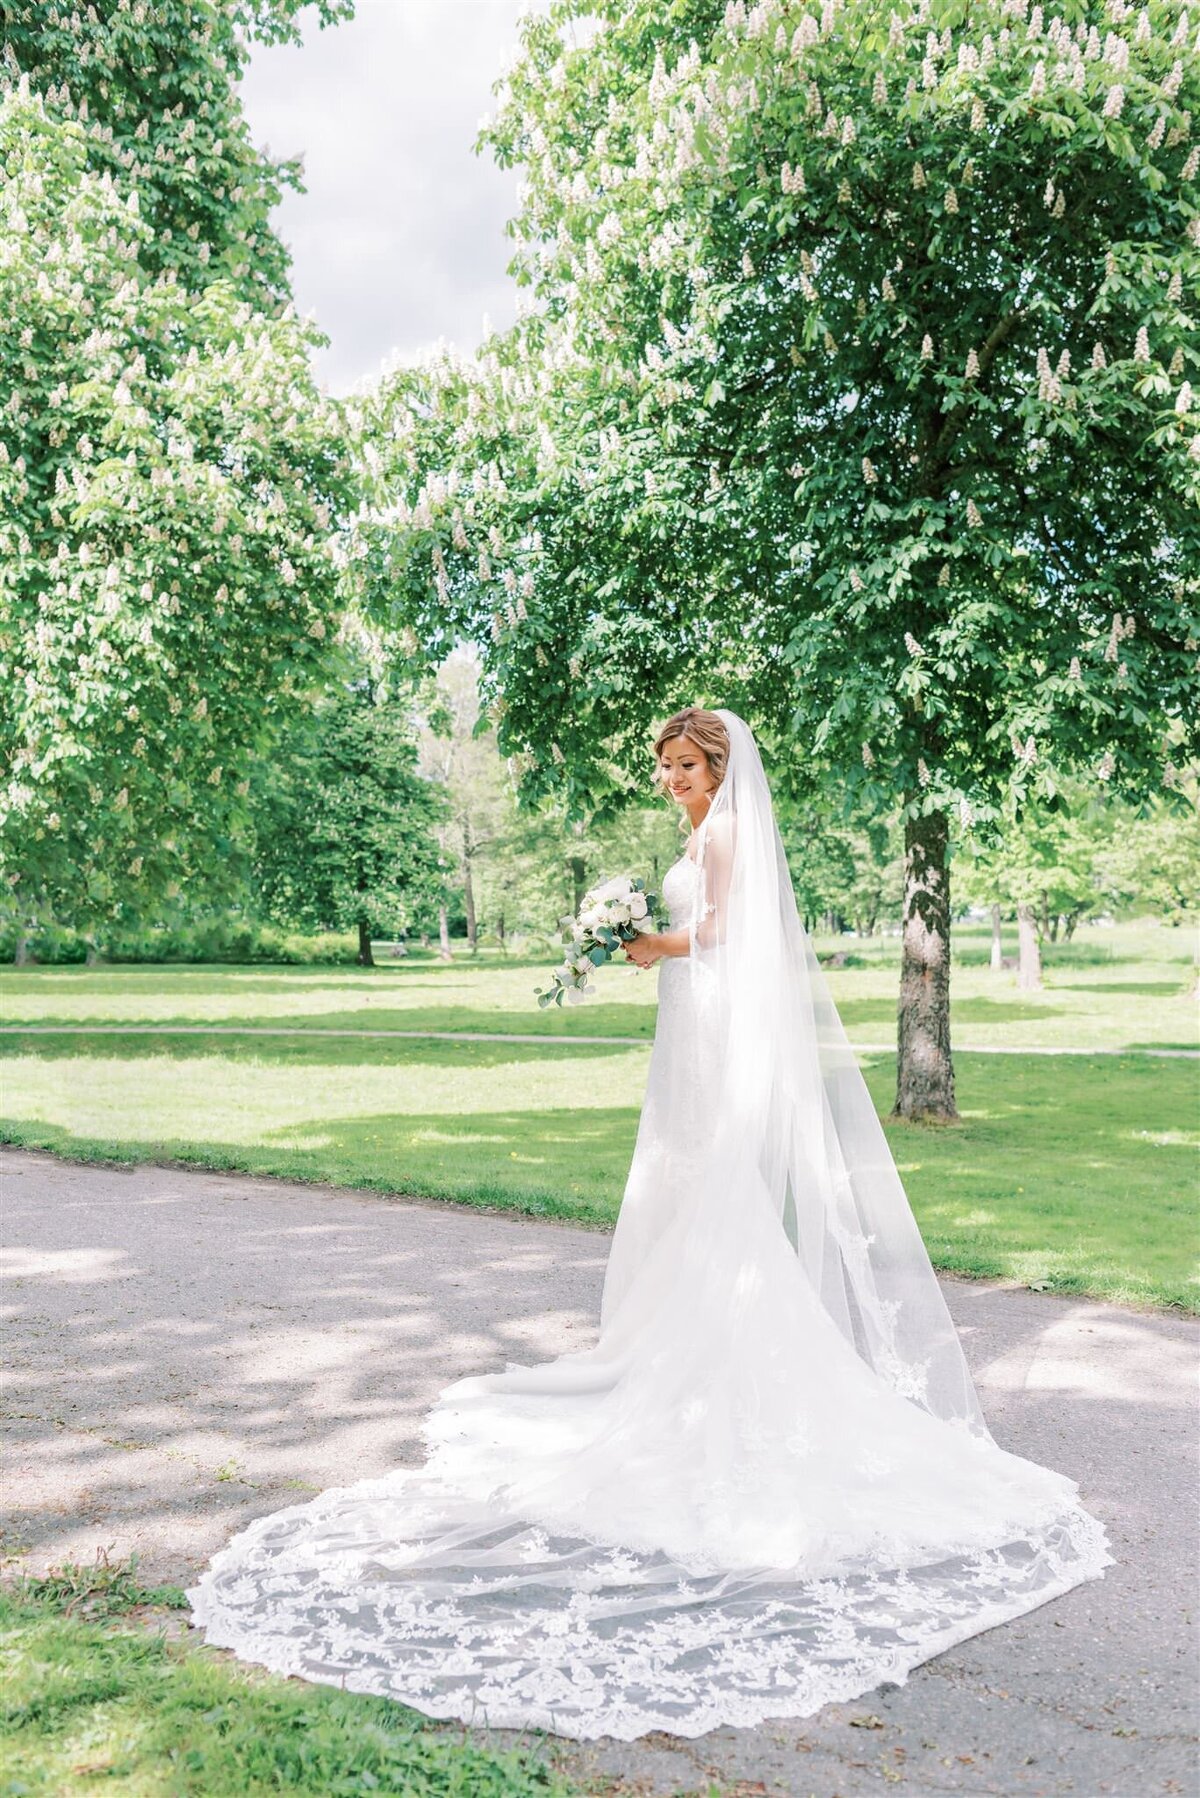 Destination Wedding Photographer Anna Lundgren - helloalora Rånäs Slott chateau wedding in Sweden romantic bridal portraits in the castle garden